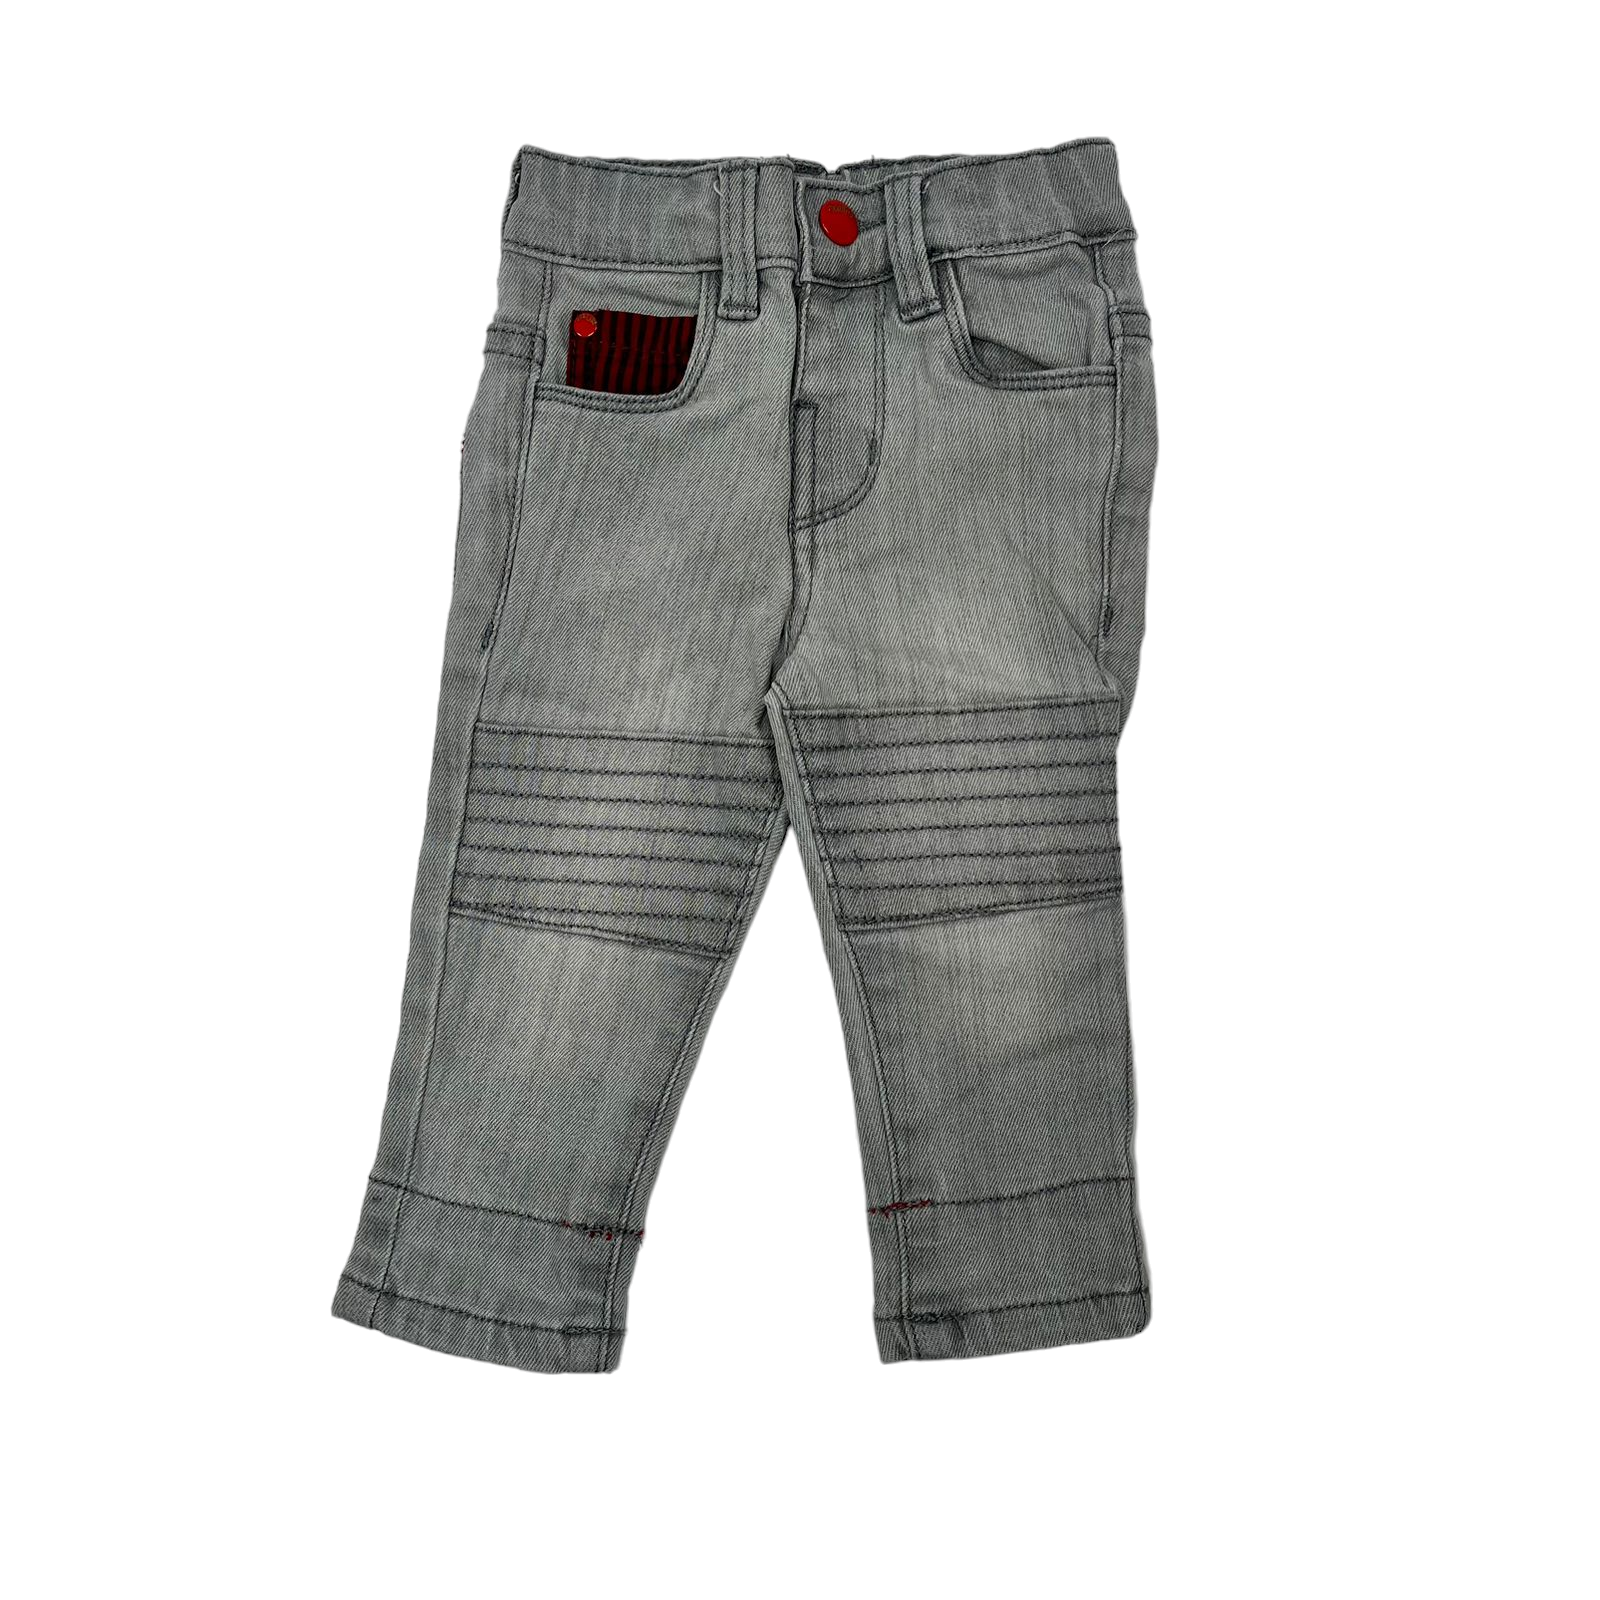 Jeans mezclilla gris con bolsillo y boton rojo